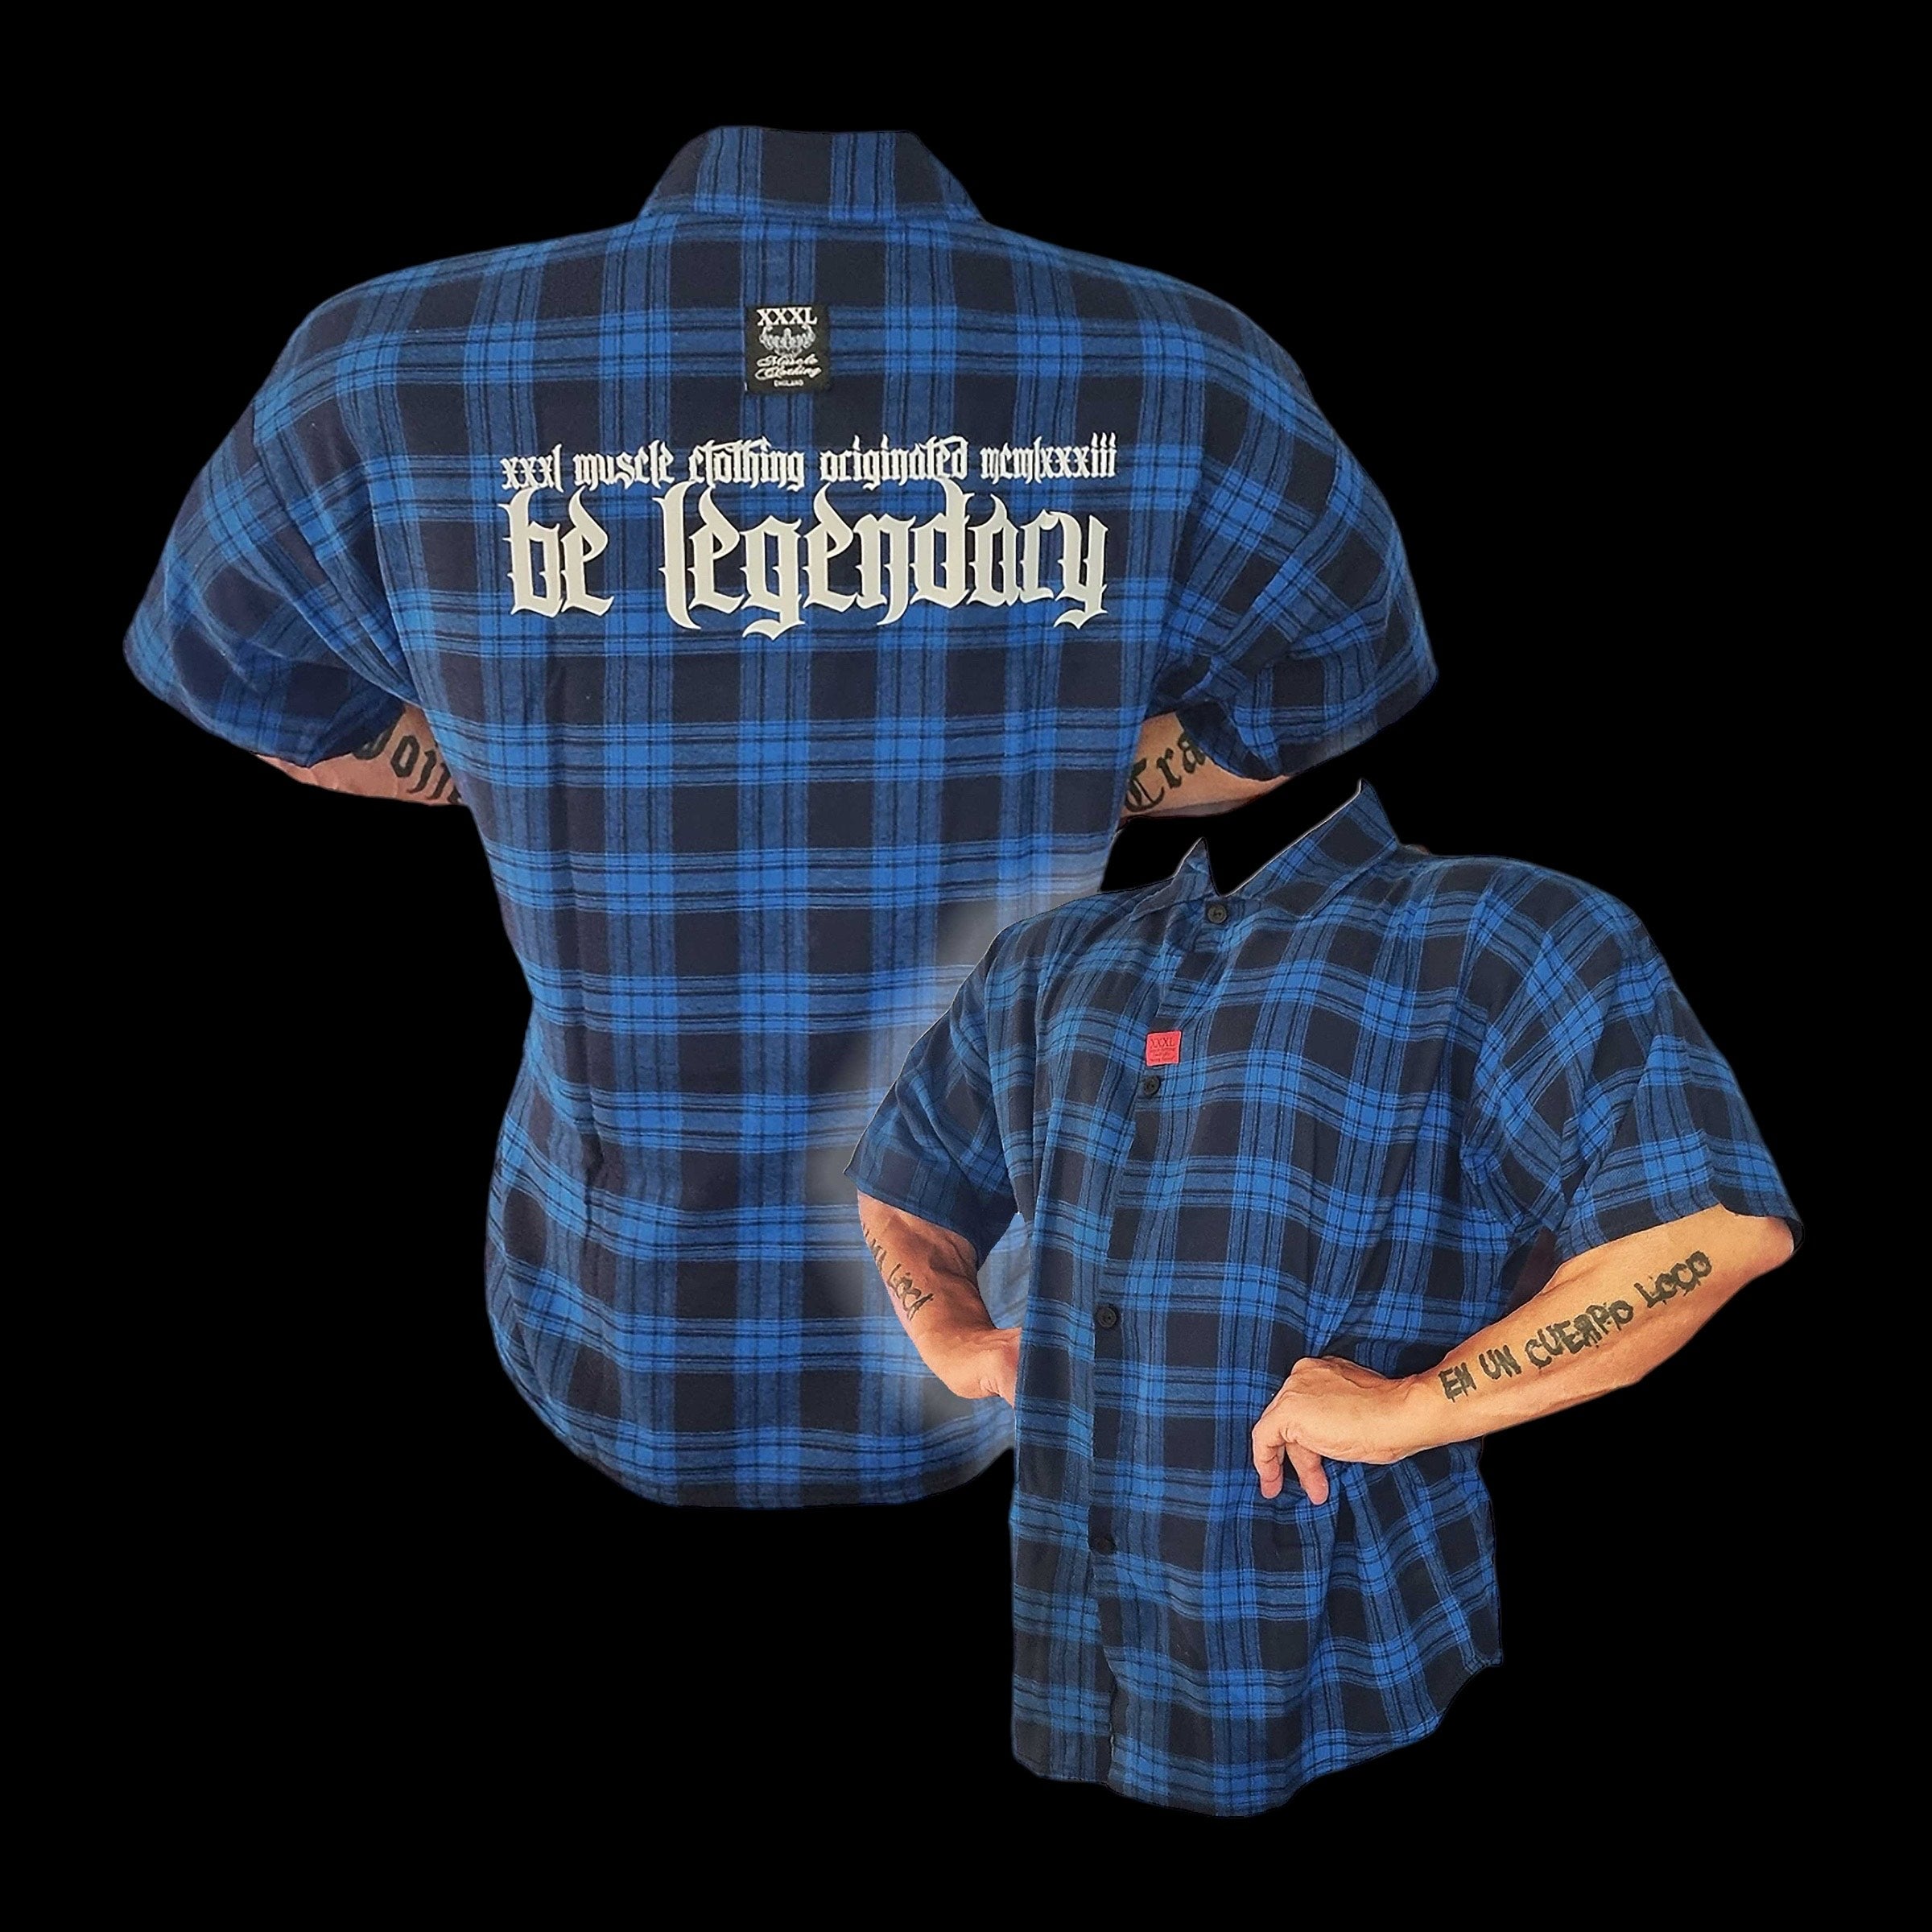 "Be Legendary" Oversized Muscle Shirt - Bright blue Plaid